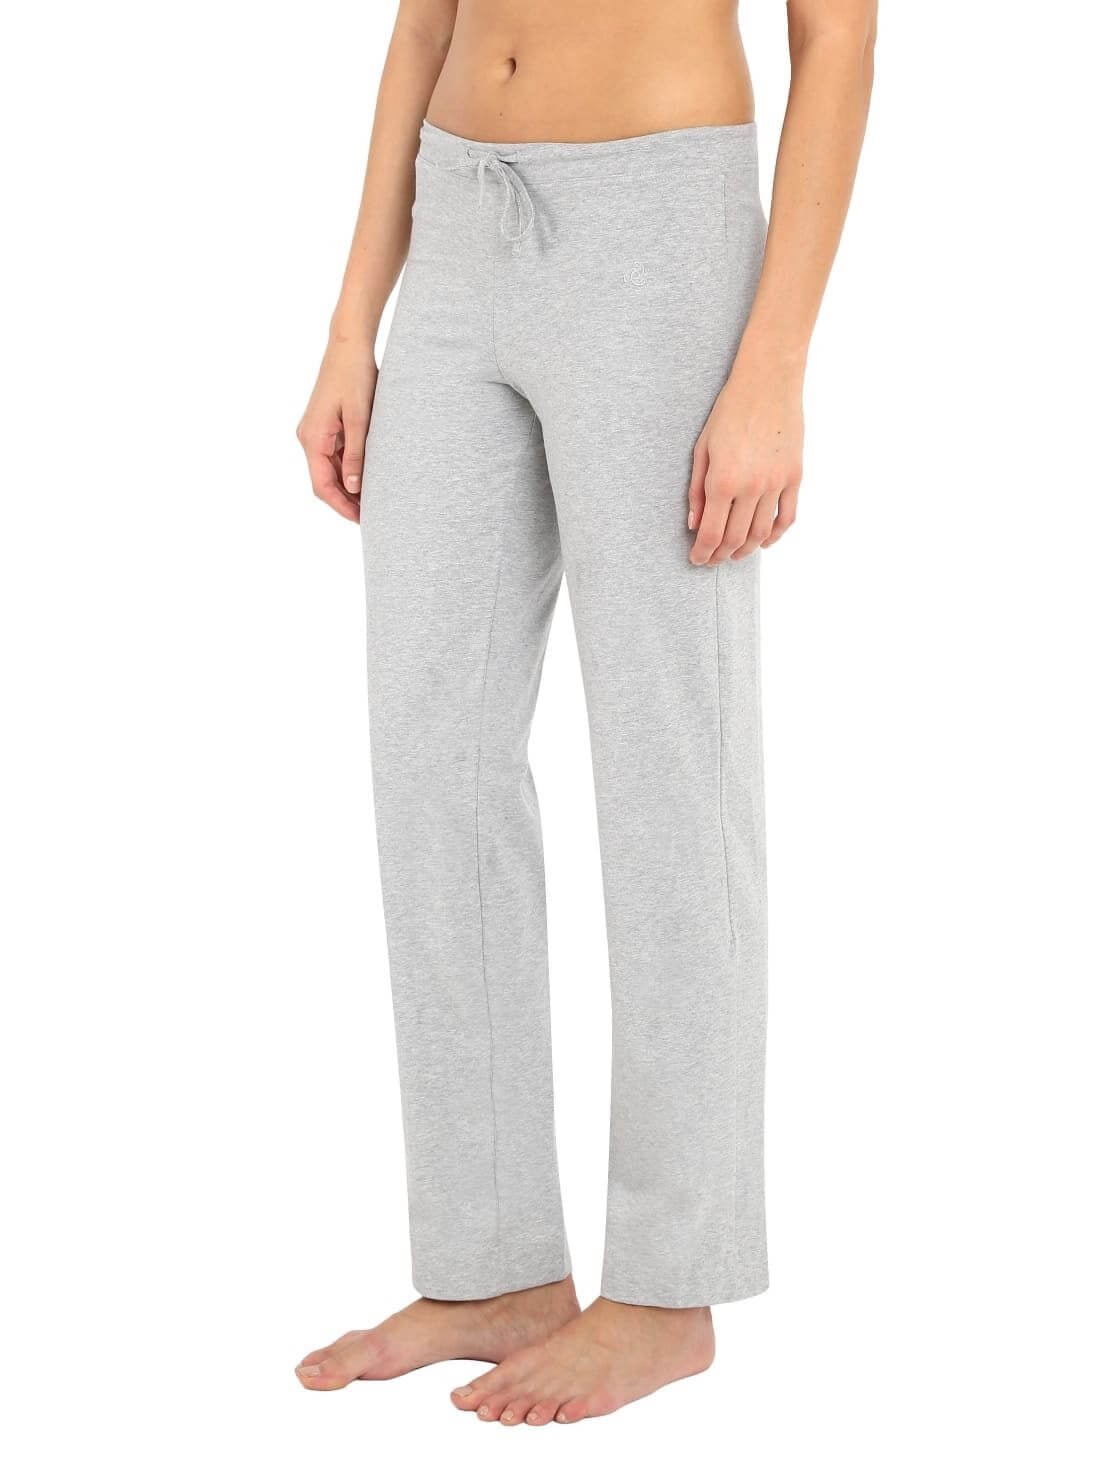 Jockey Grey Lounge Pants for Women #1301 [Old Fit]